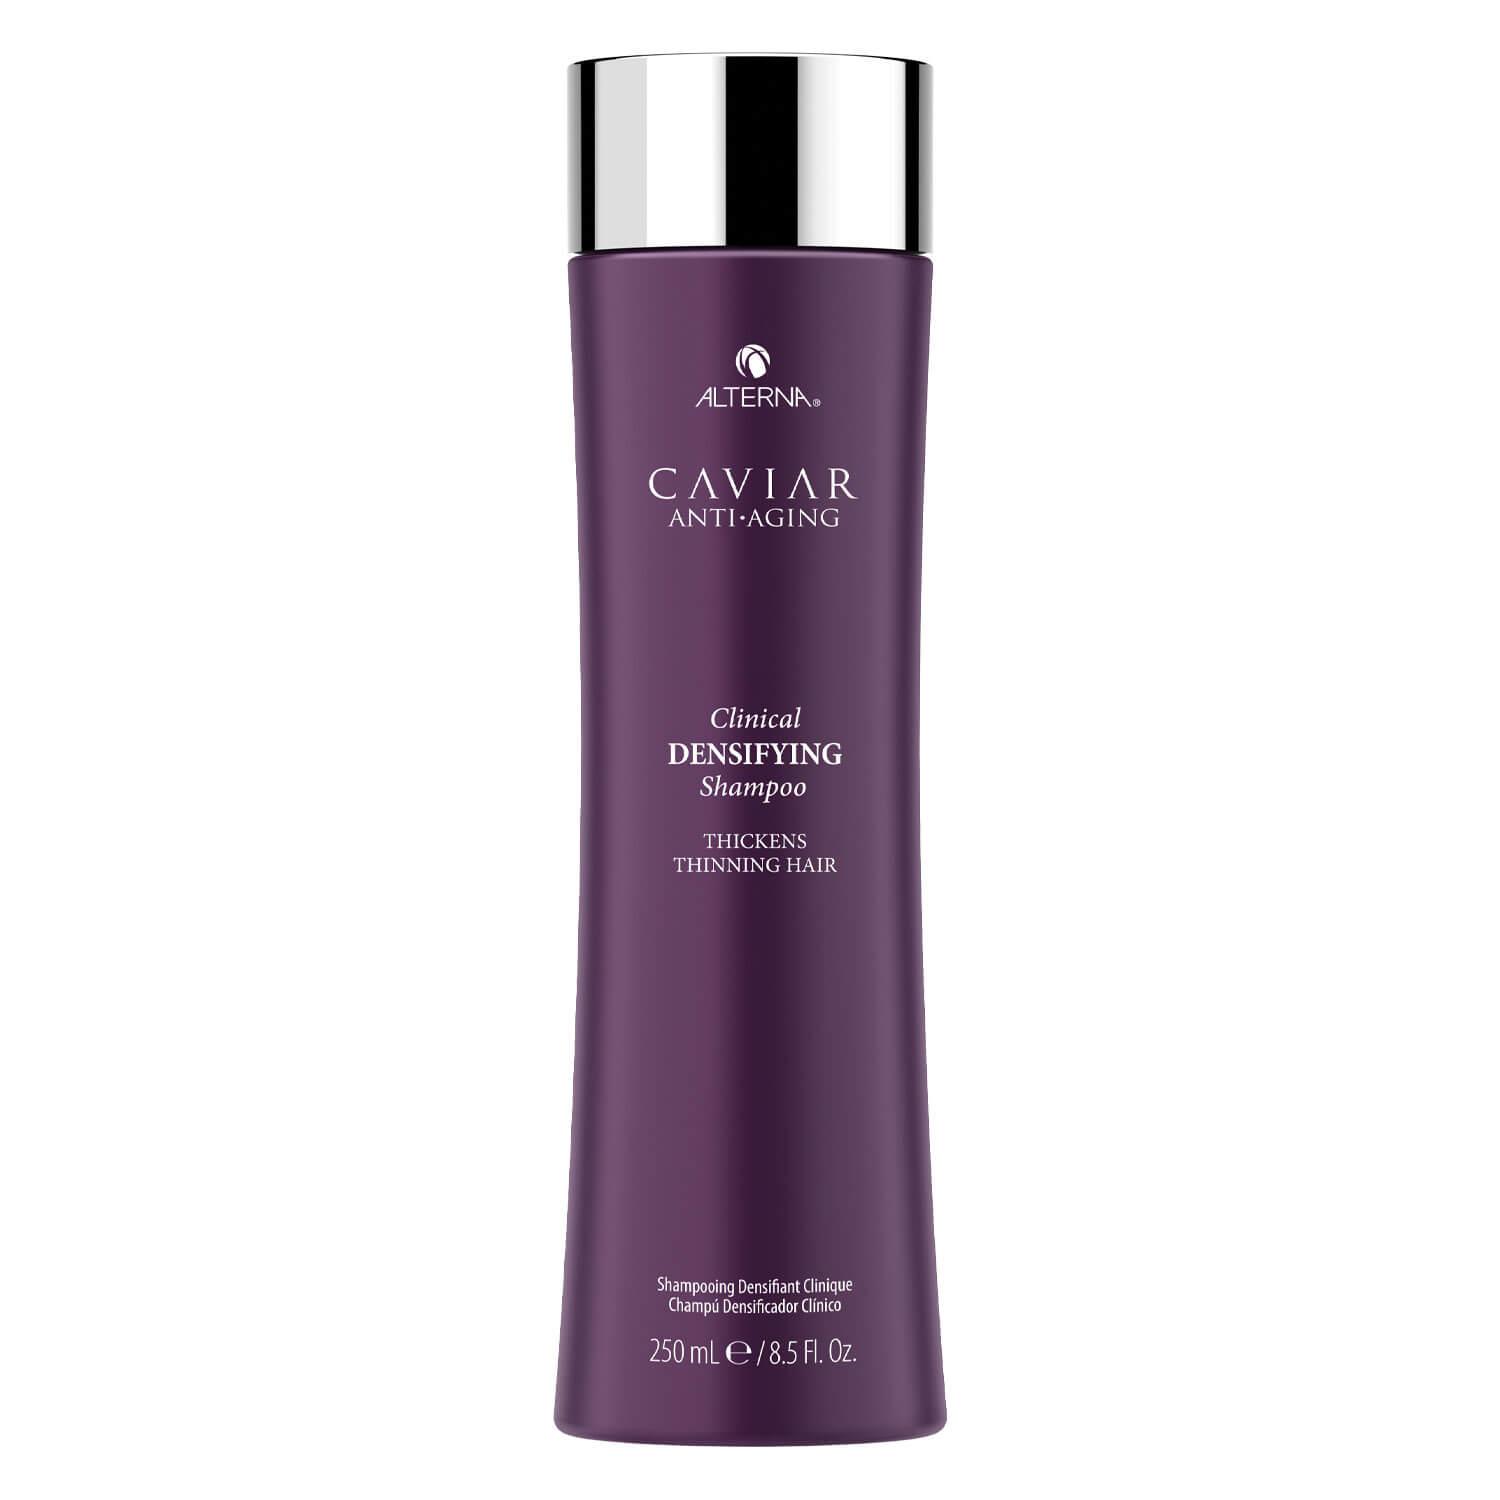 Caviar Clinical - Densifying Shampoo